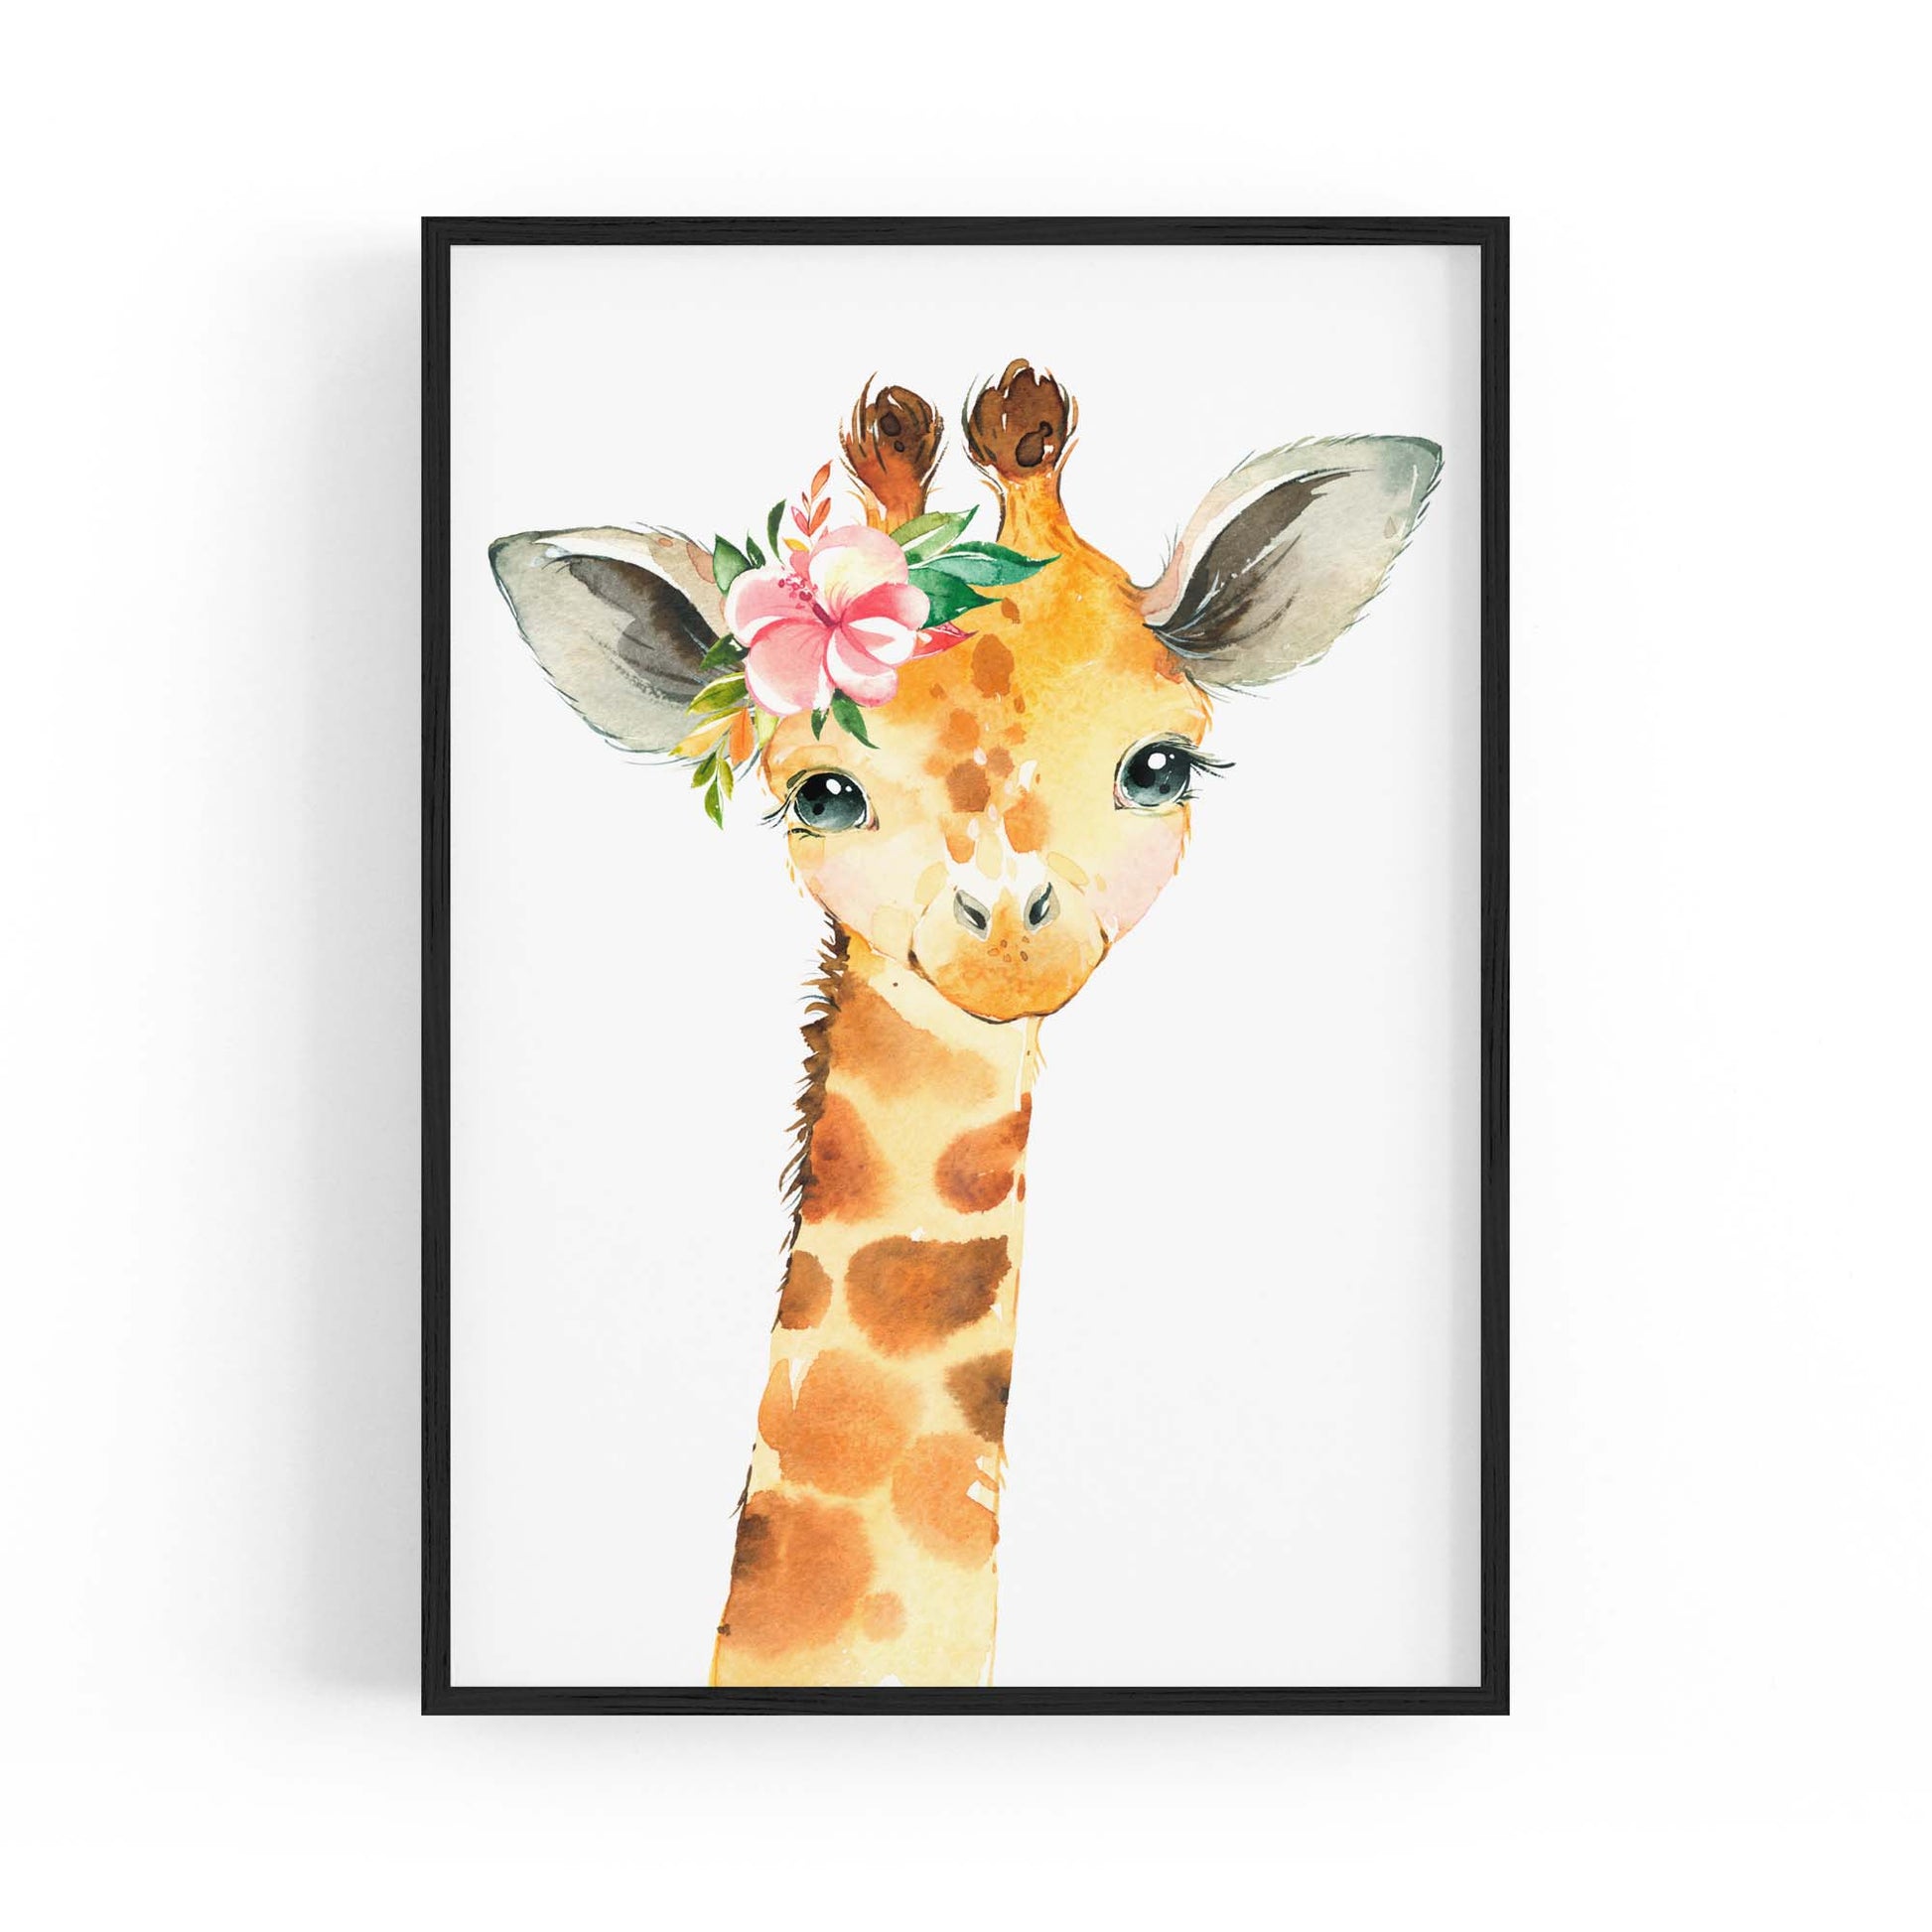 Cute Baby Giraffe Nursery Animal Gift Wall Art - The Affordable Art Company